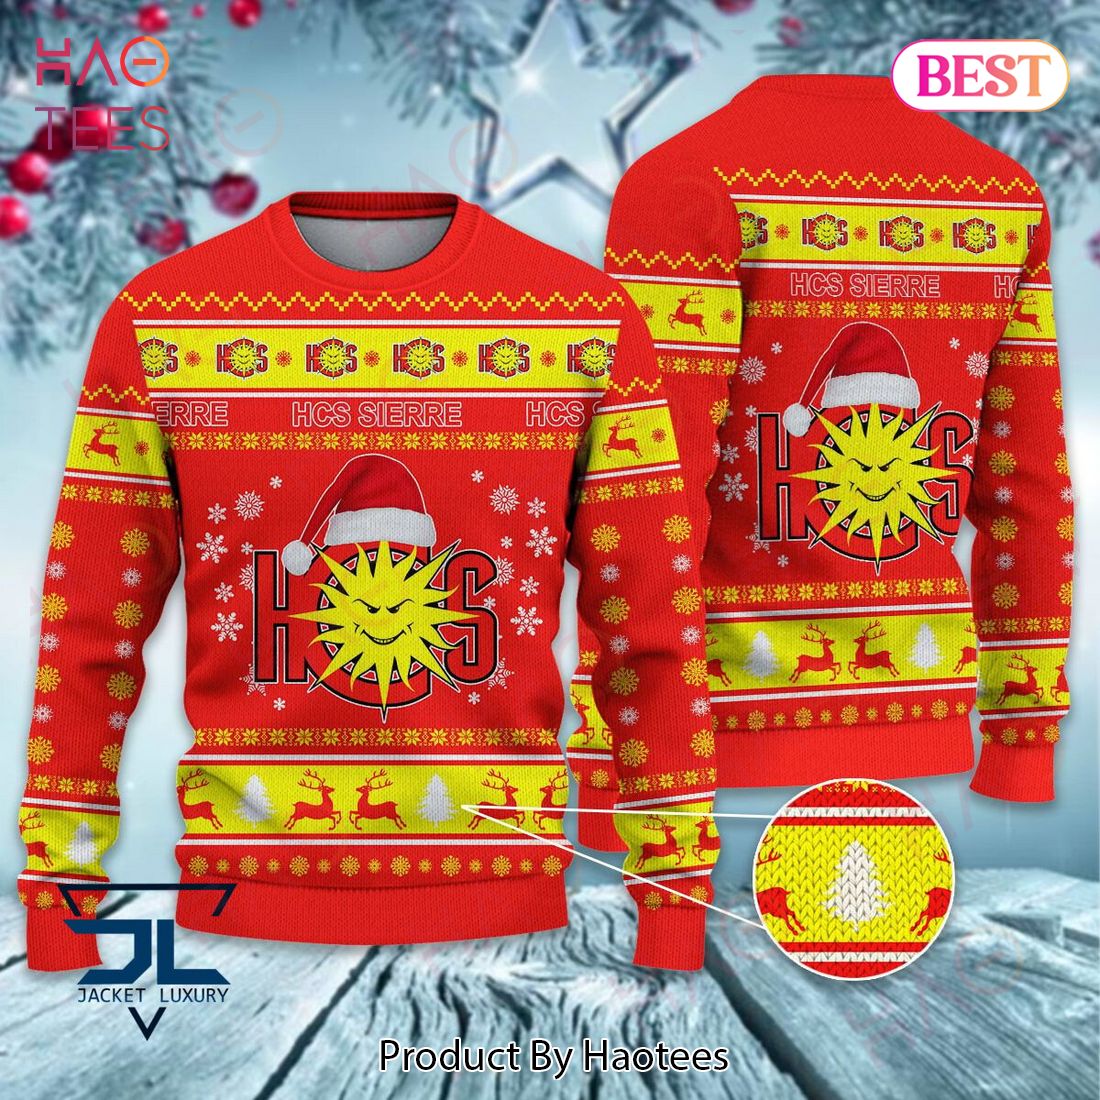 BEST HCS Sierre Luxury Brand Sweater Limited Edition